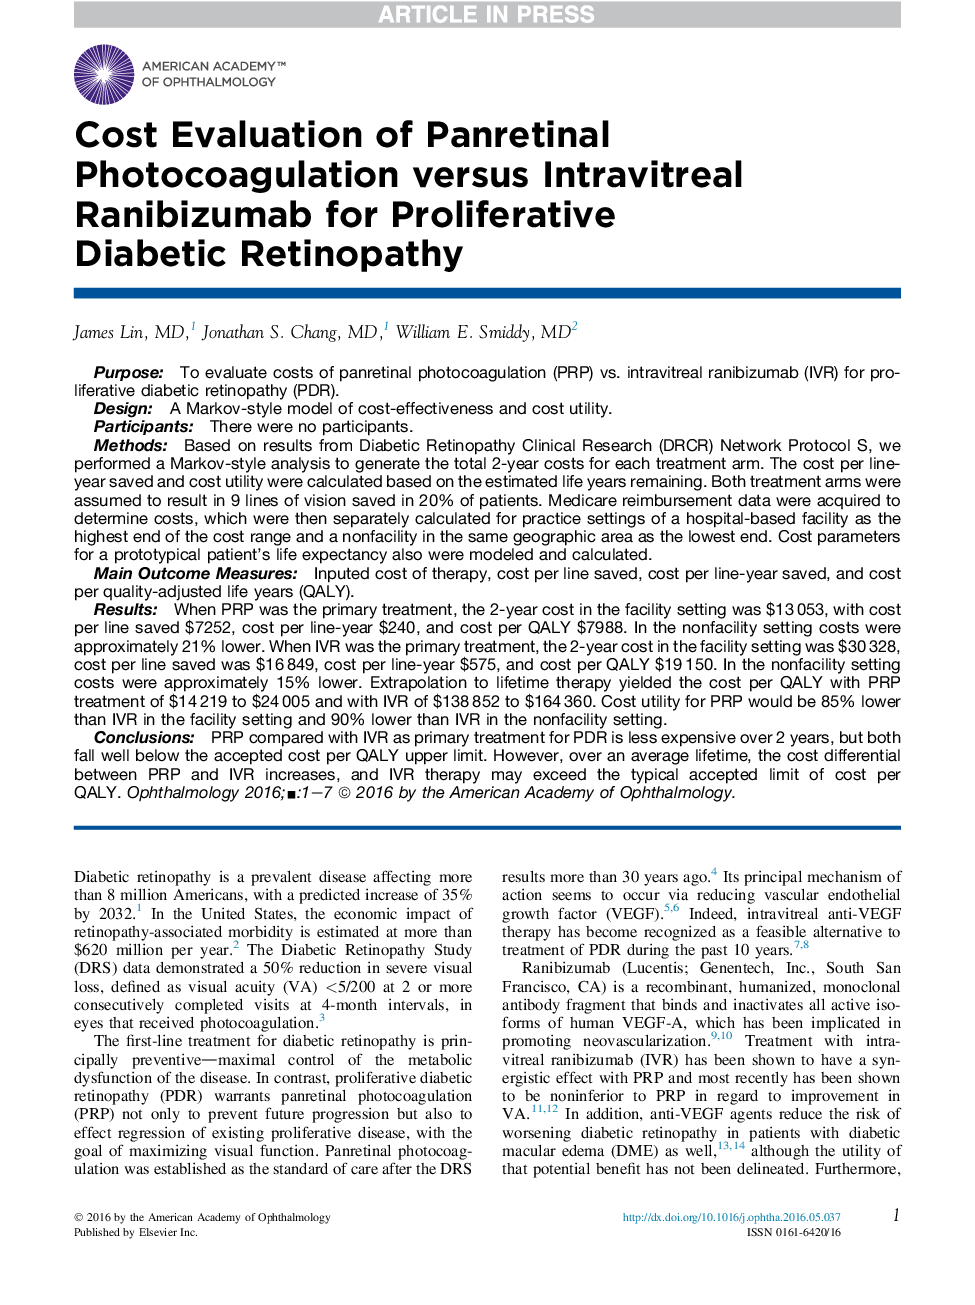 Cost Evaluation of Panretinal Photocoagulation versus Intravitreal Ranibizumab for Proliferative DiabeticÂ Retinopathy